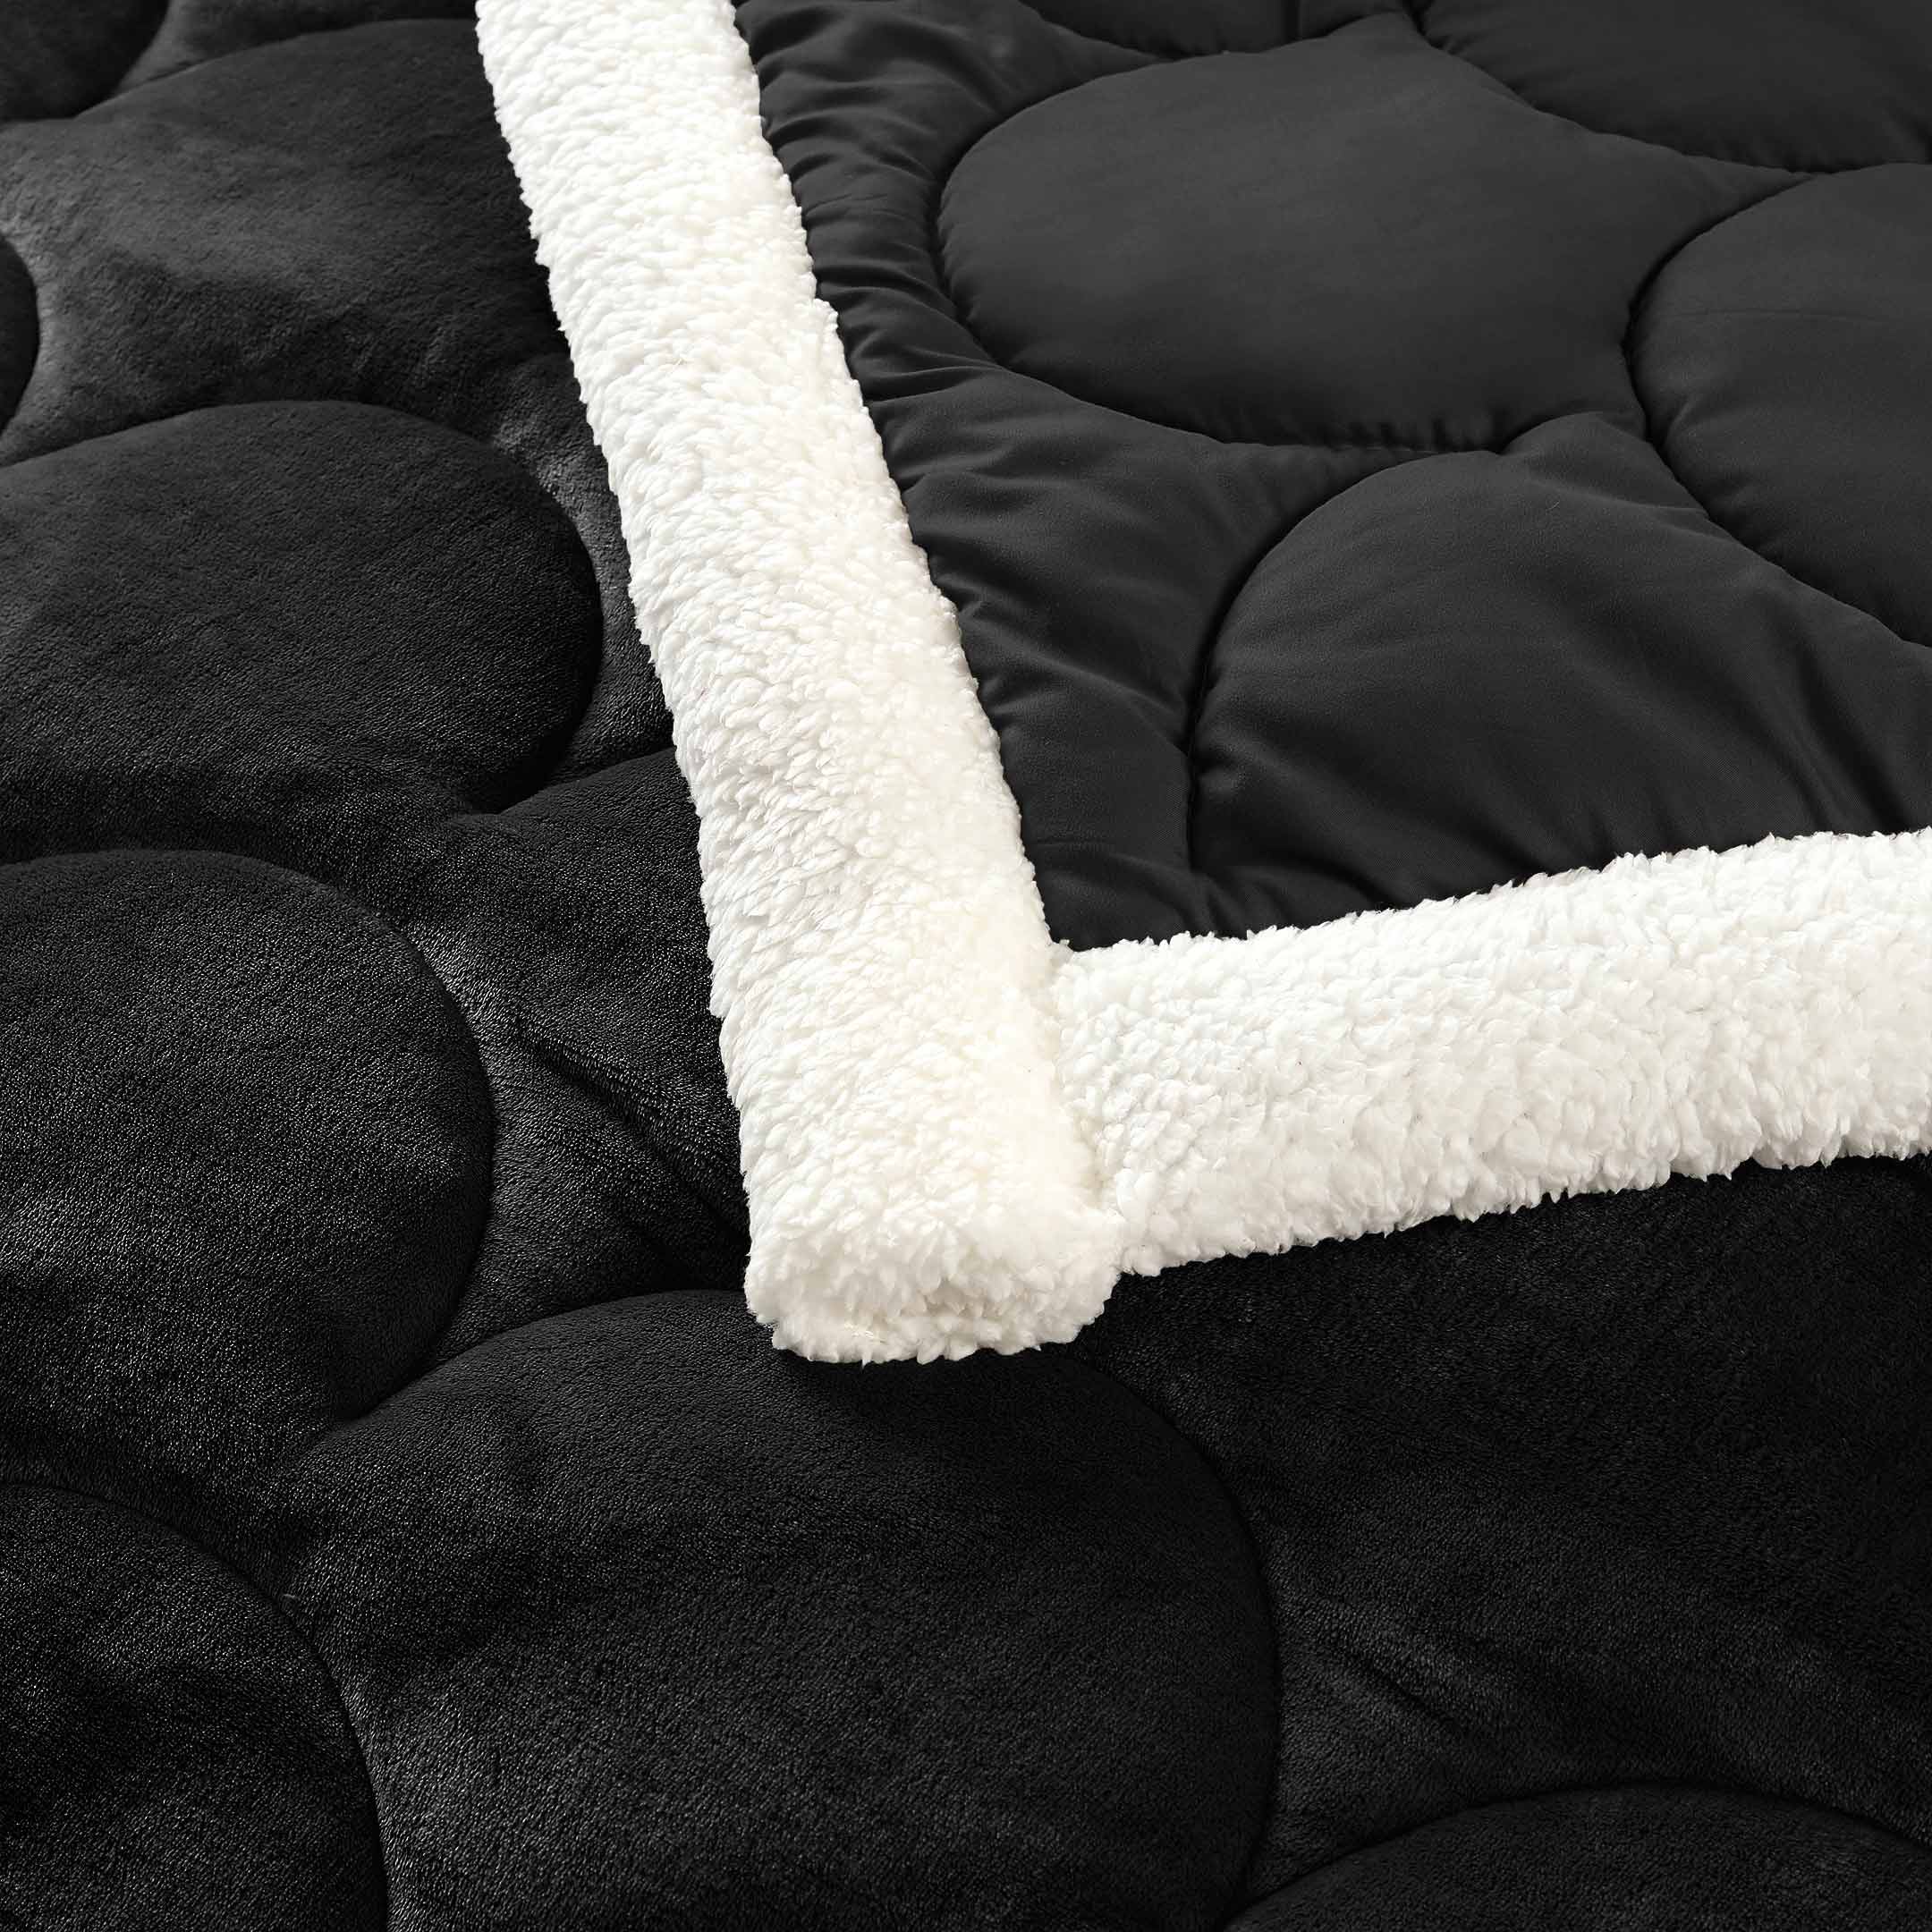 Seashell Quilted Fleece Comforter Set 6pcs Black